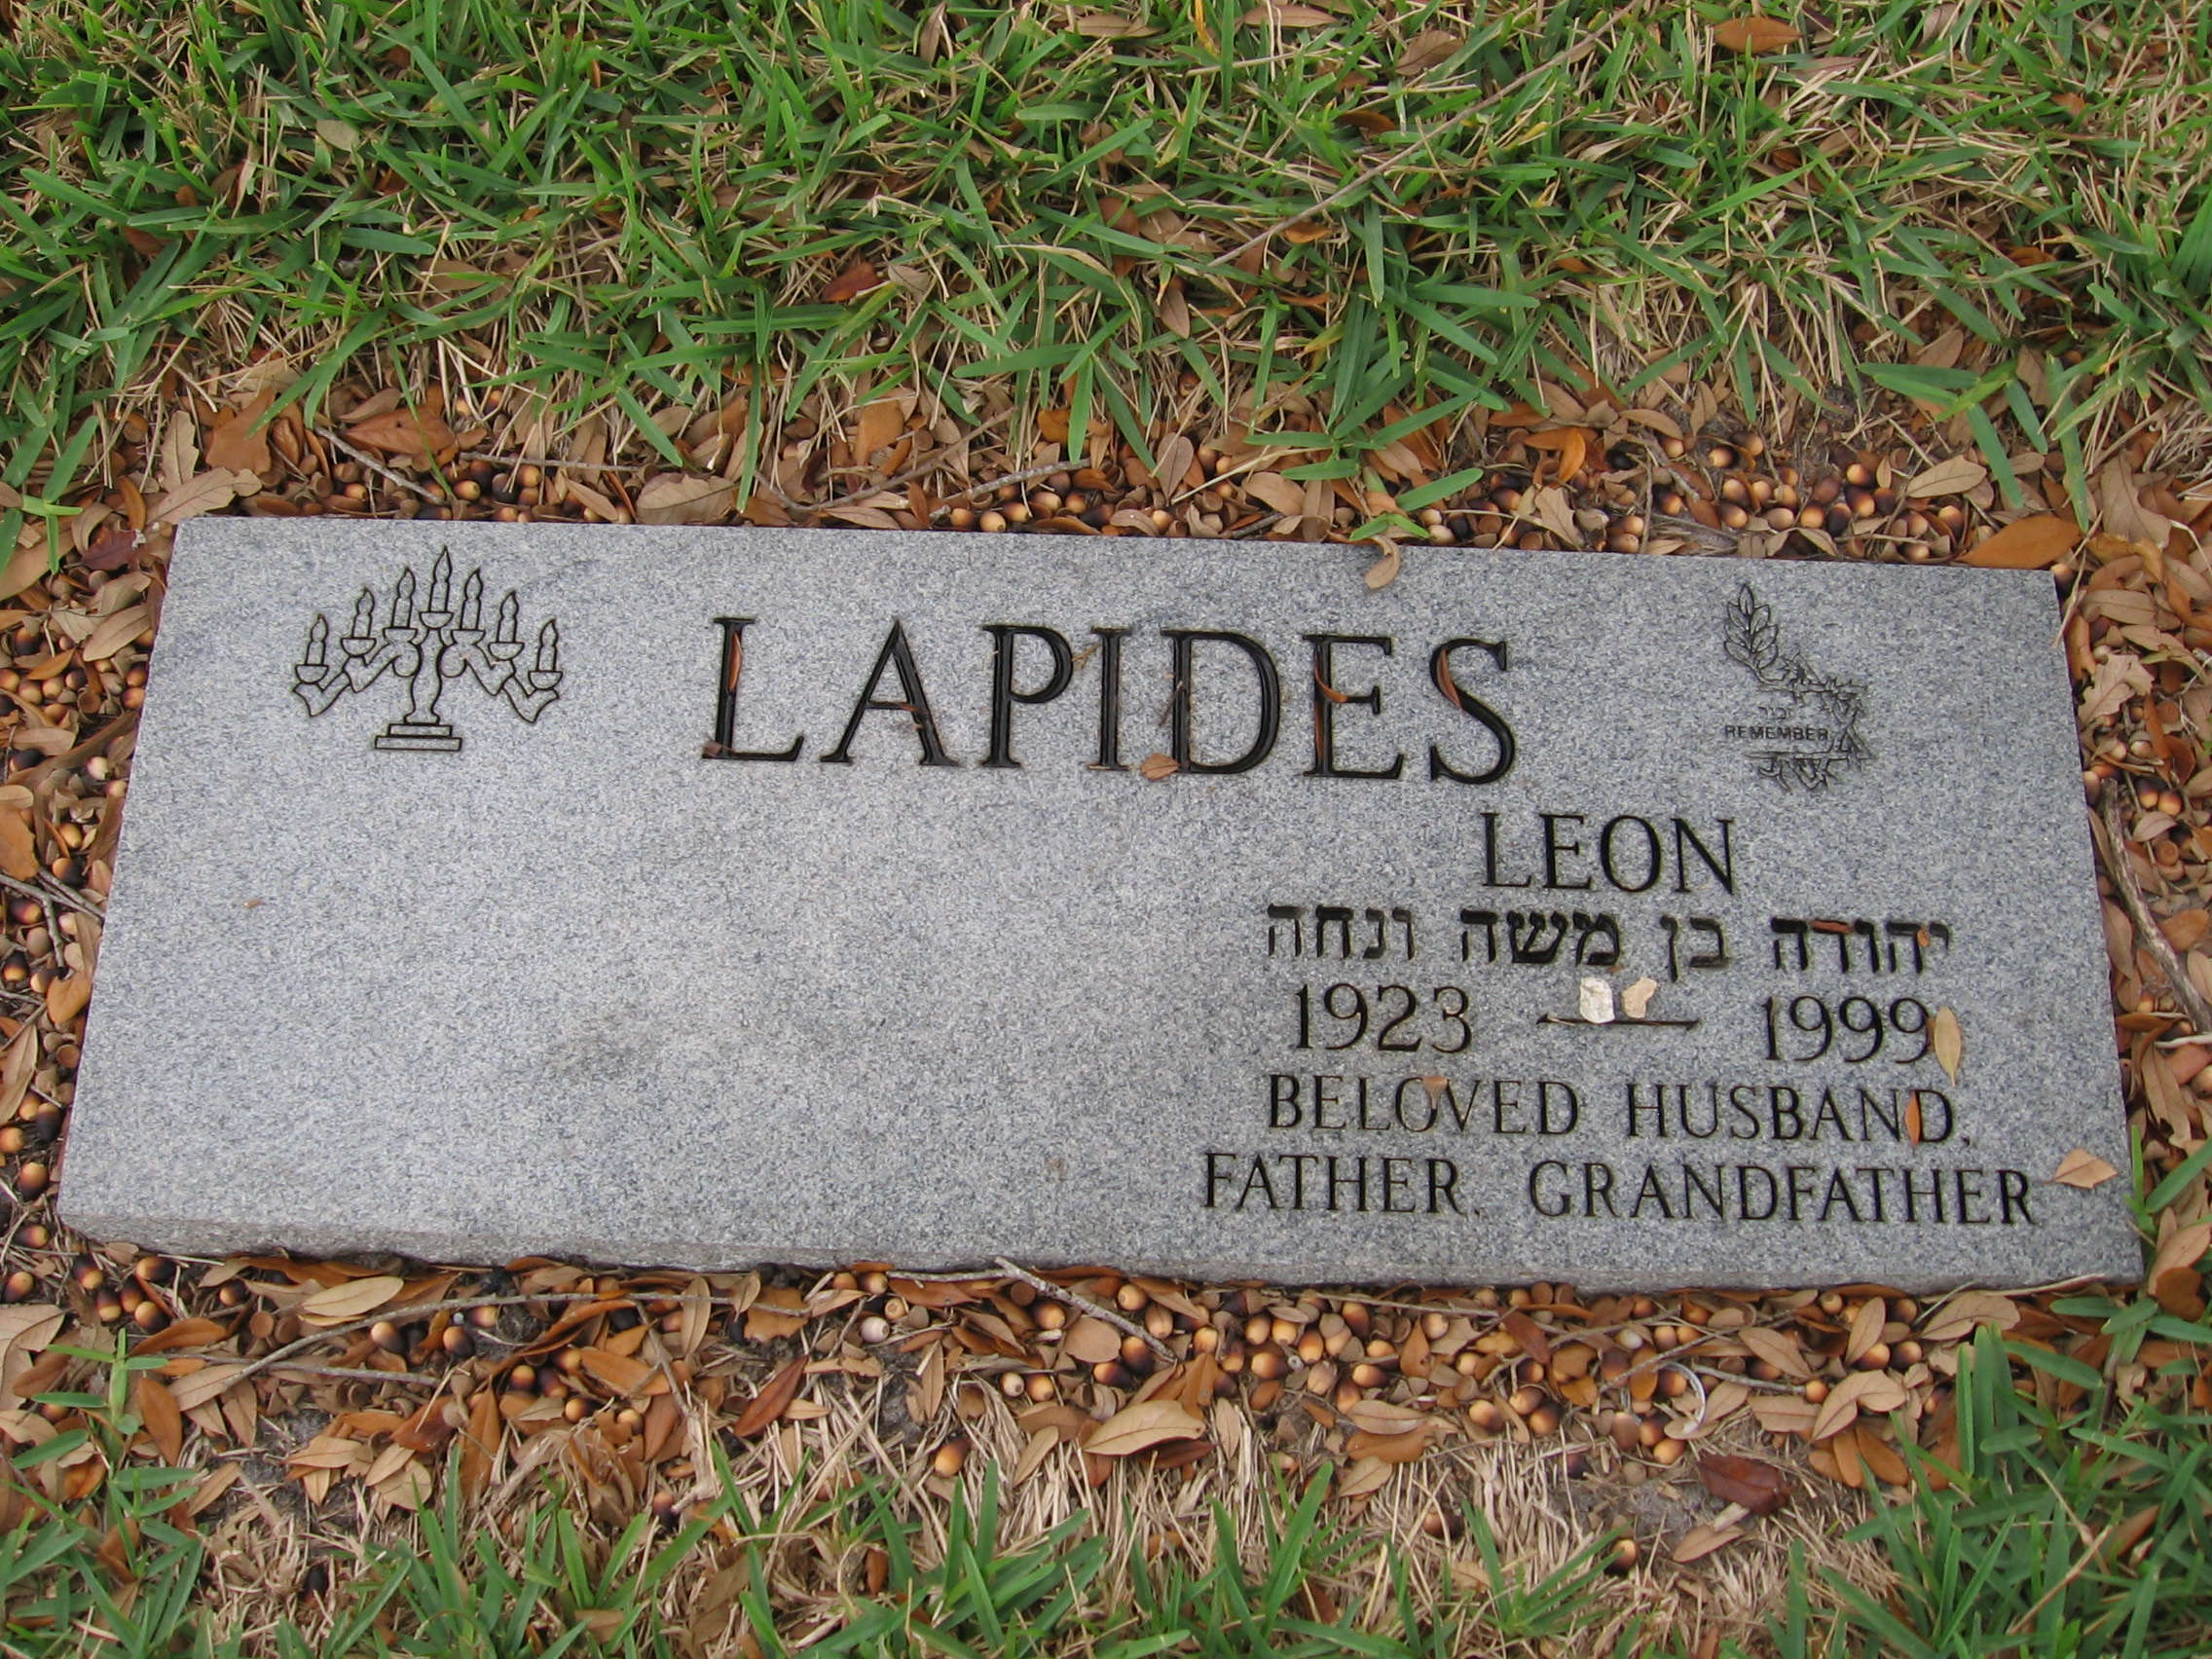 Leon Lapides